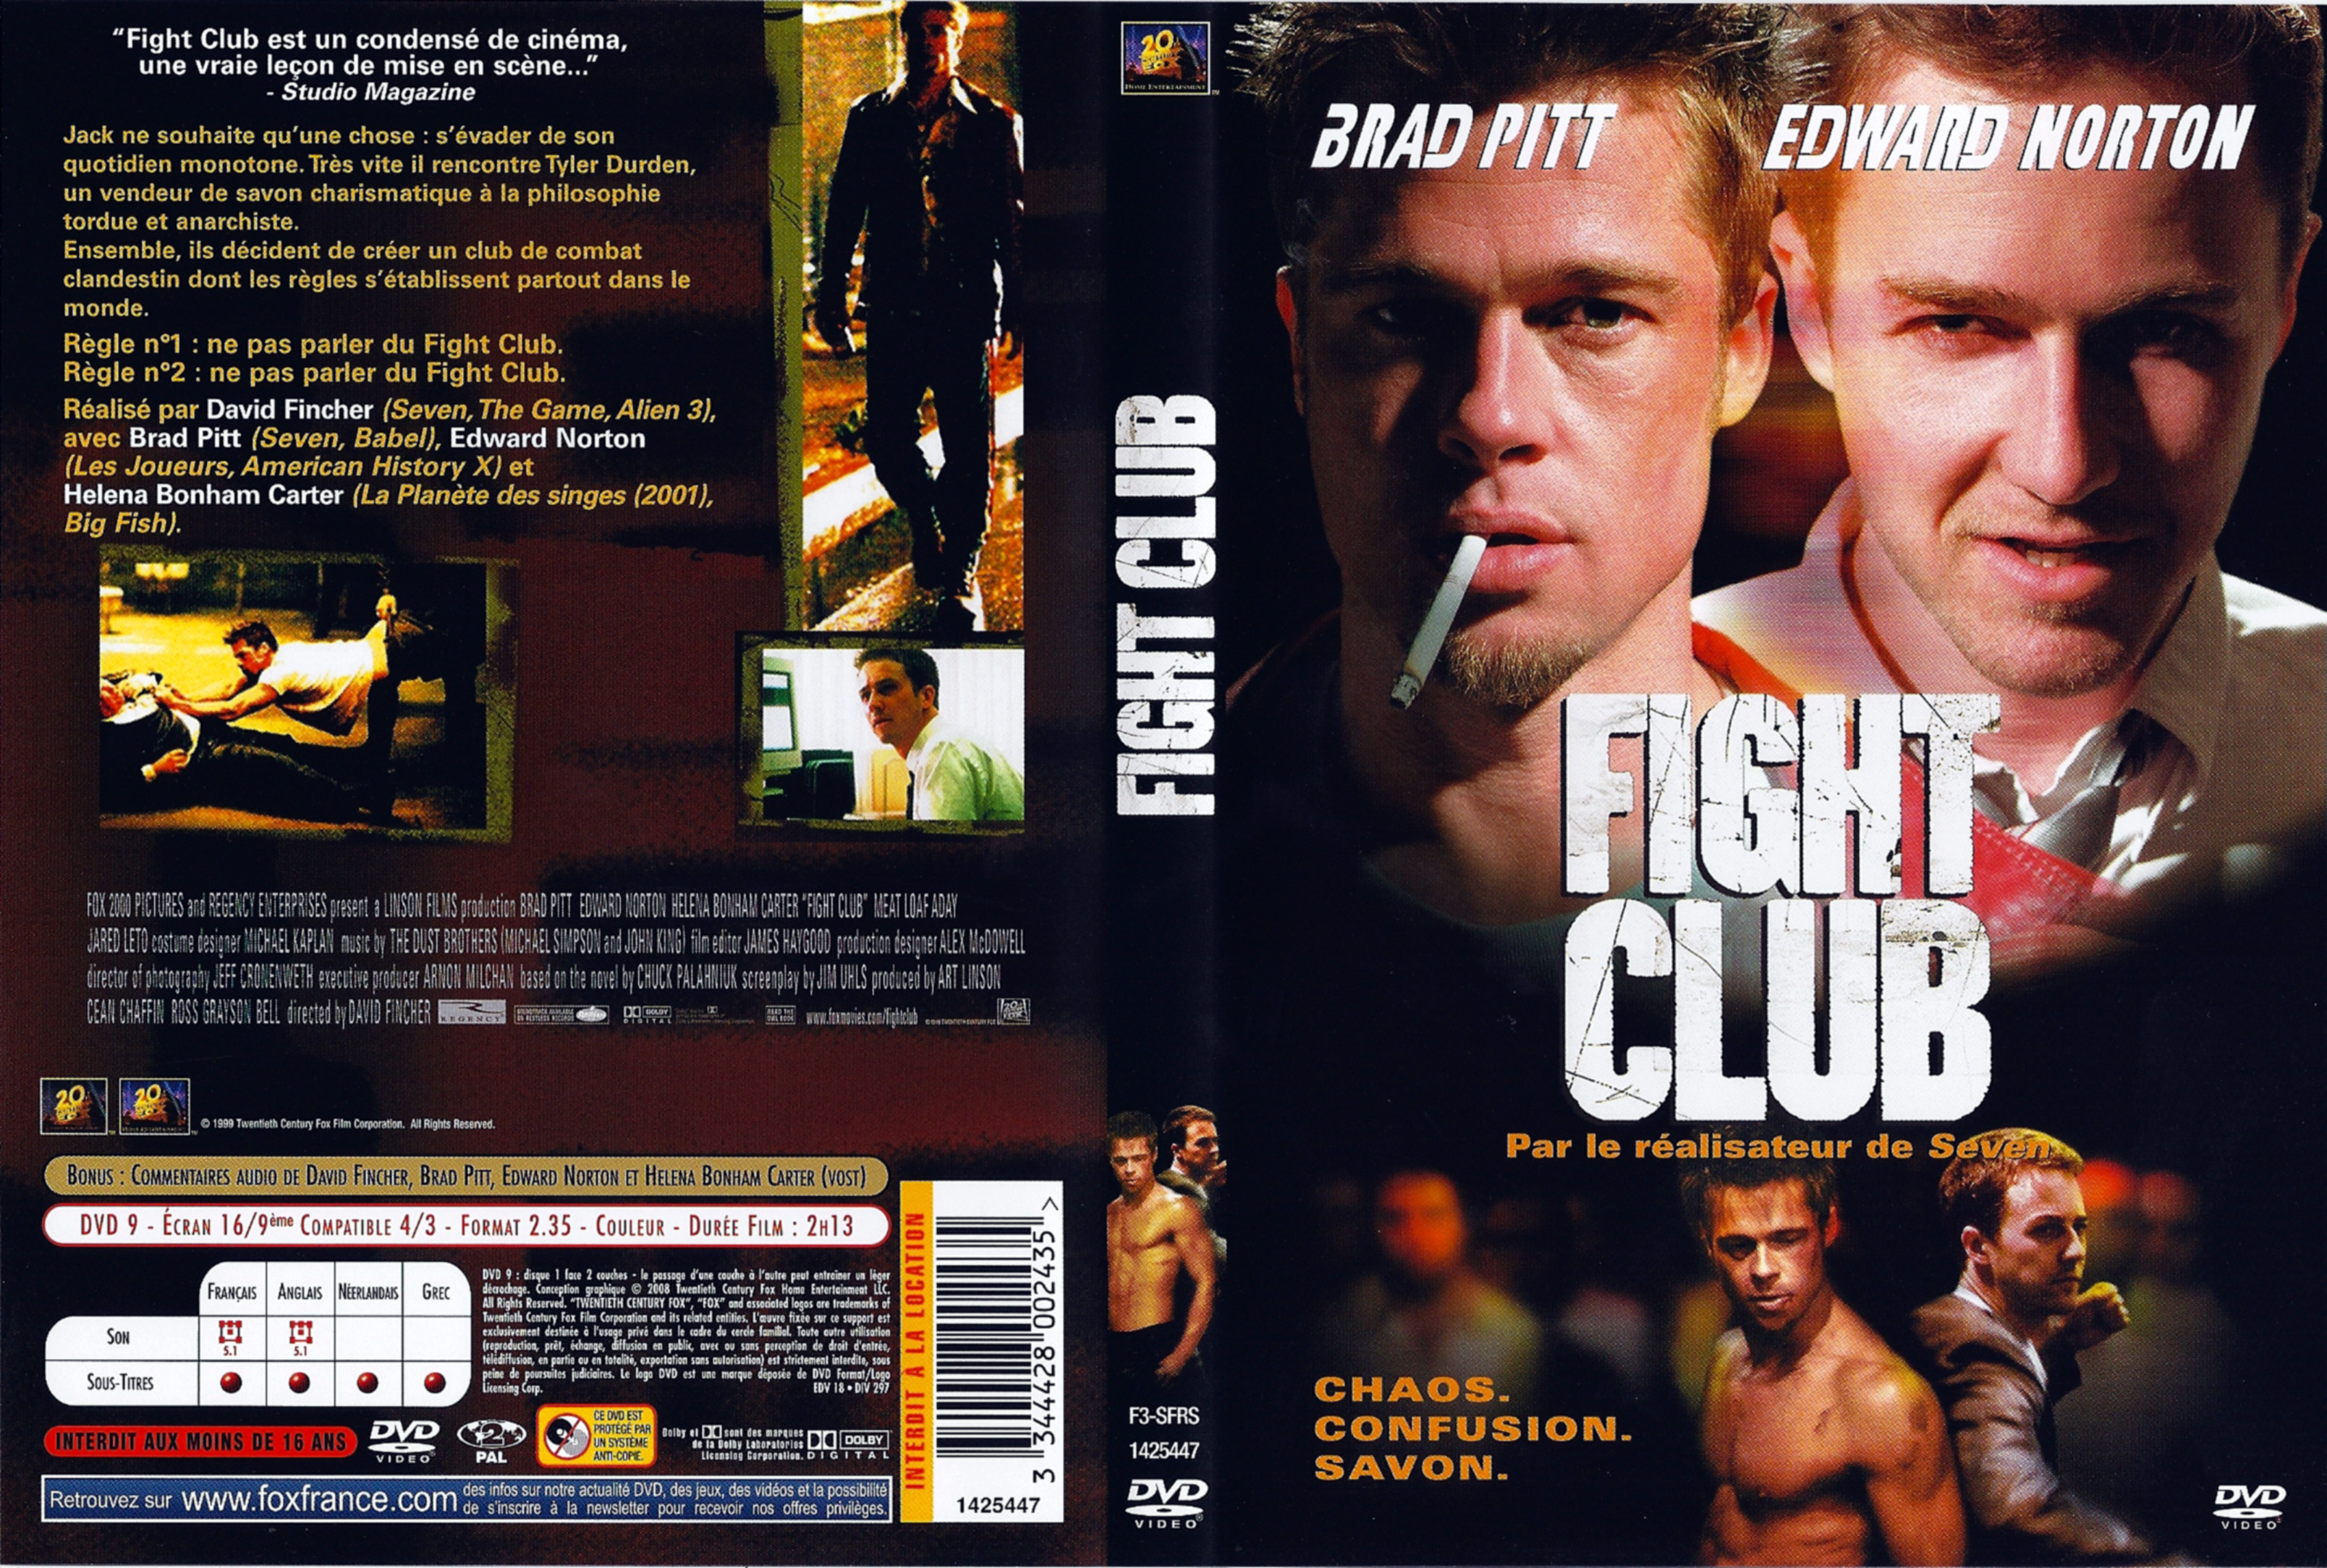 Jaquette DVD Fight club v3